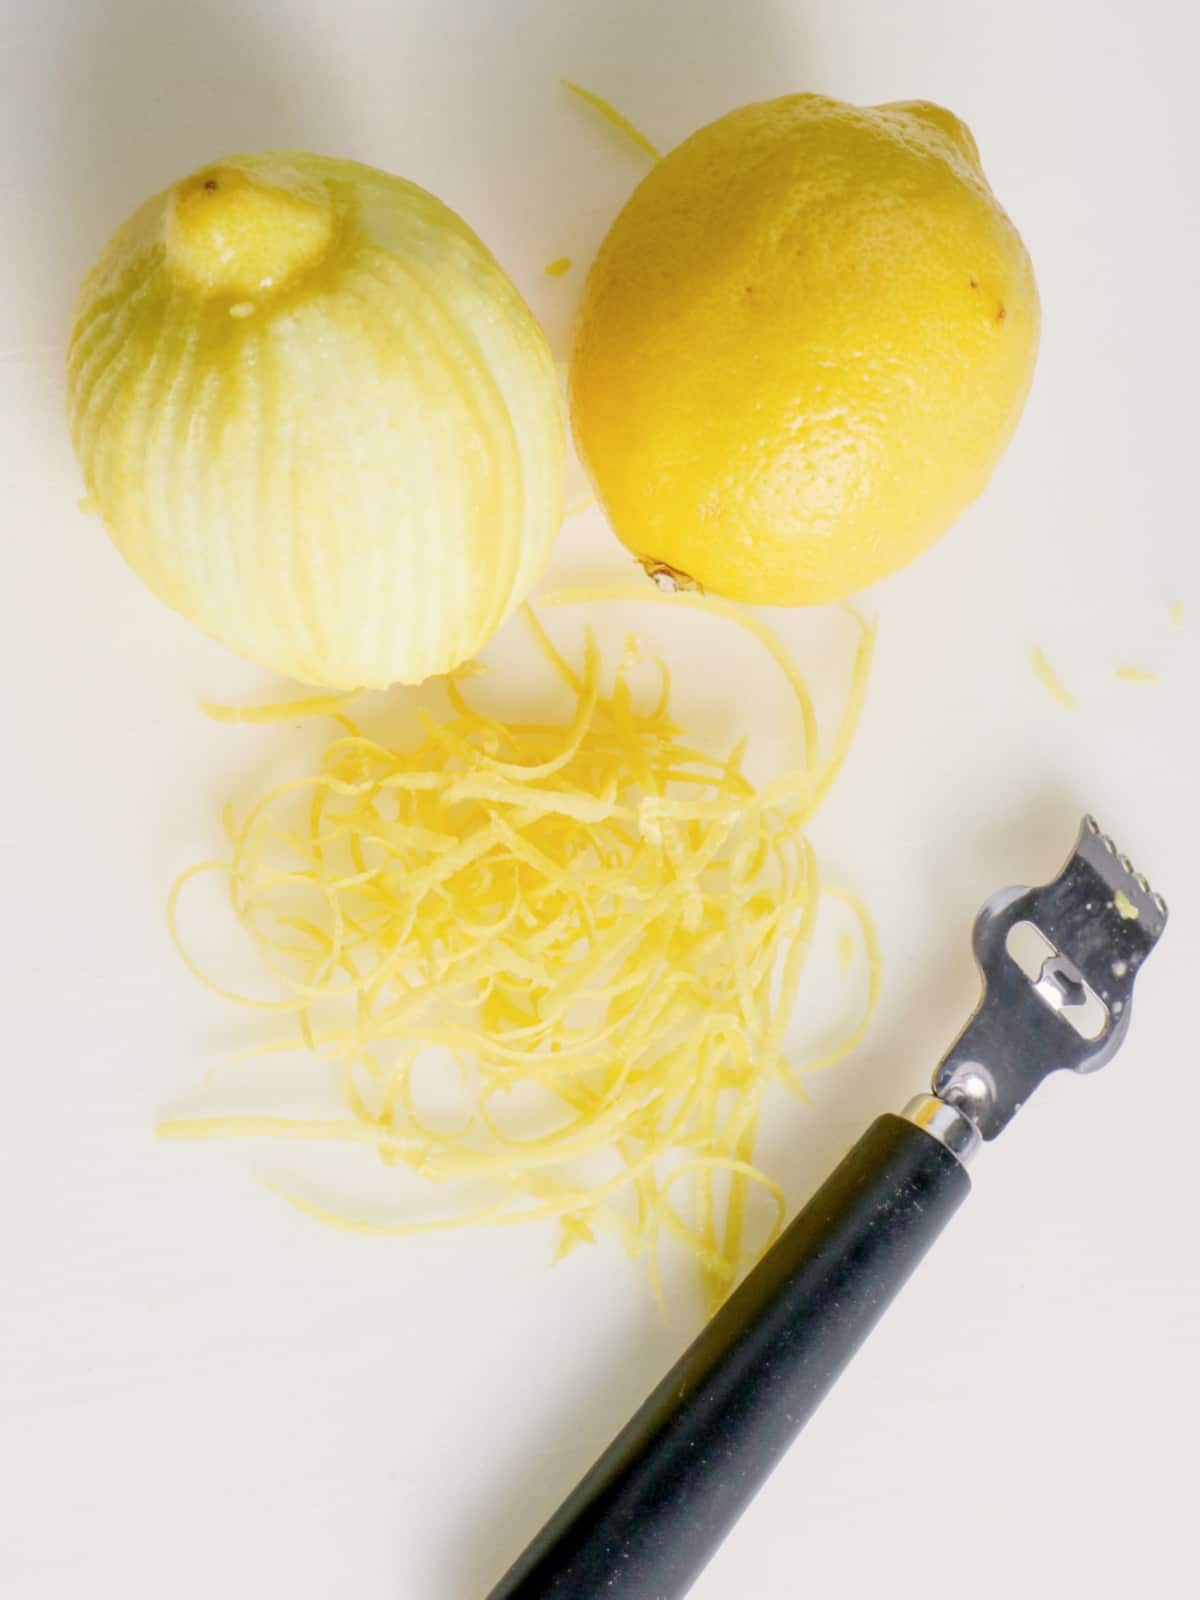 zest the lemons